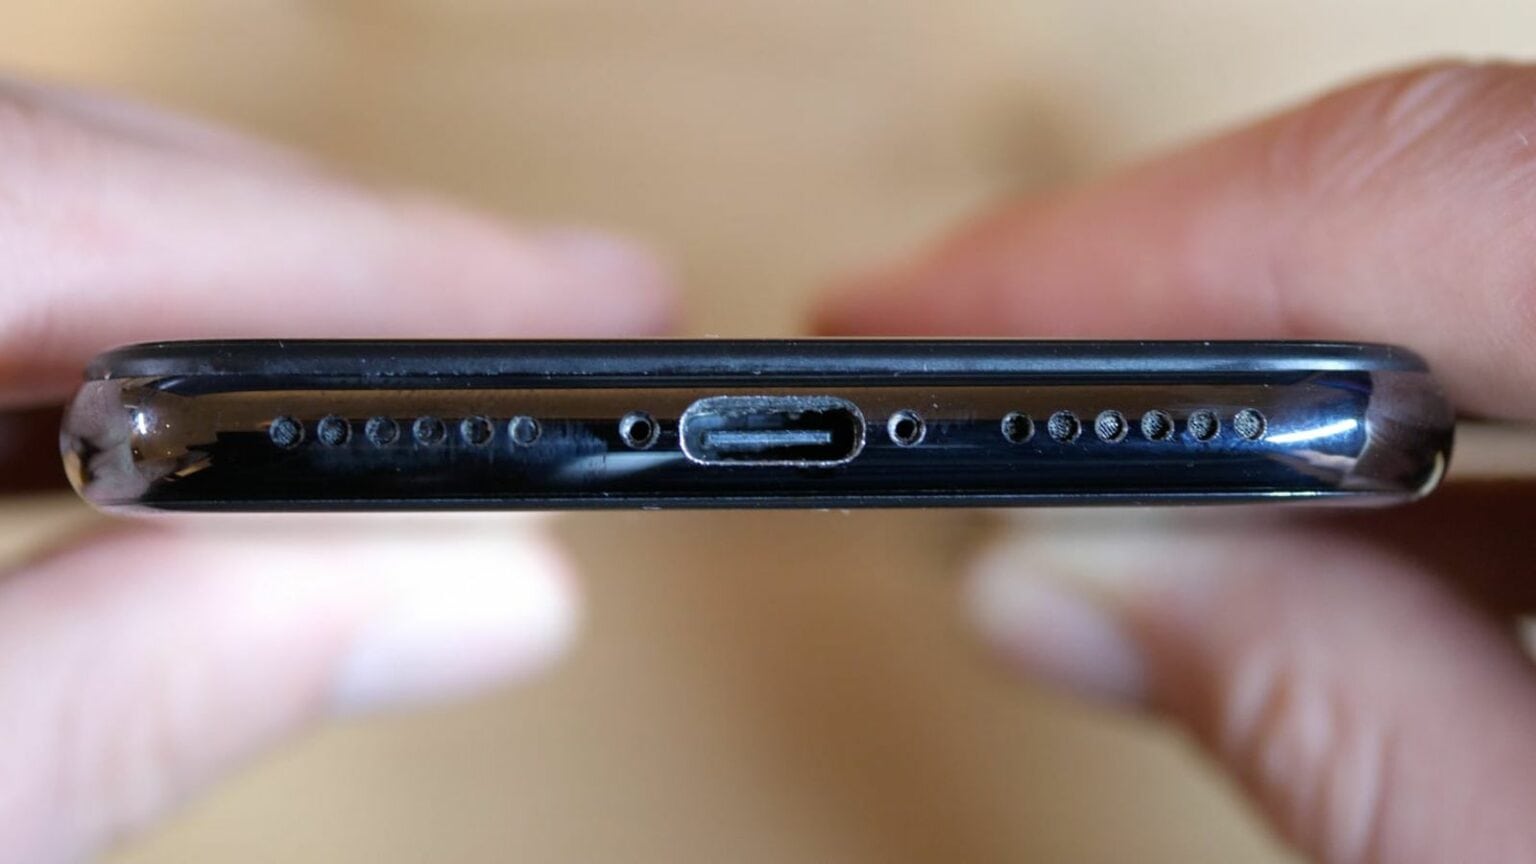 iPhone X with USB-C port